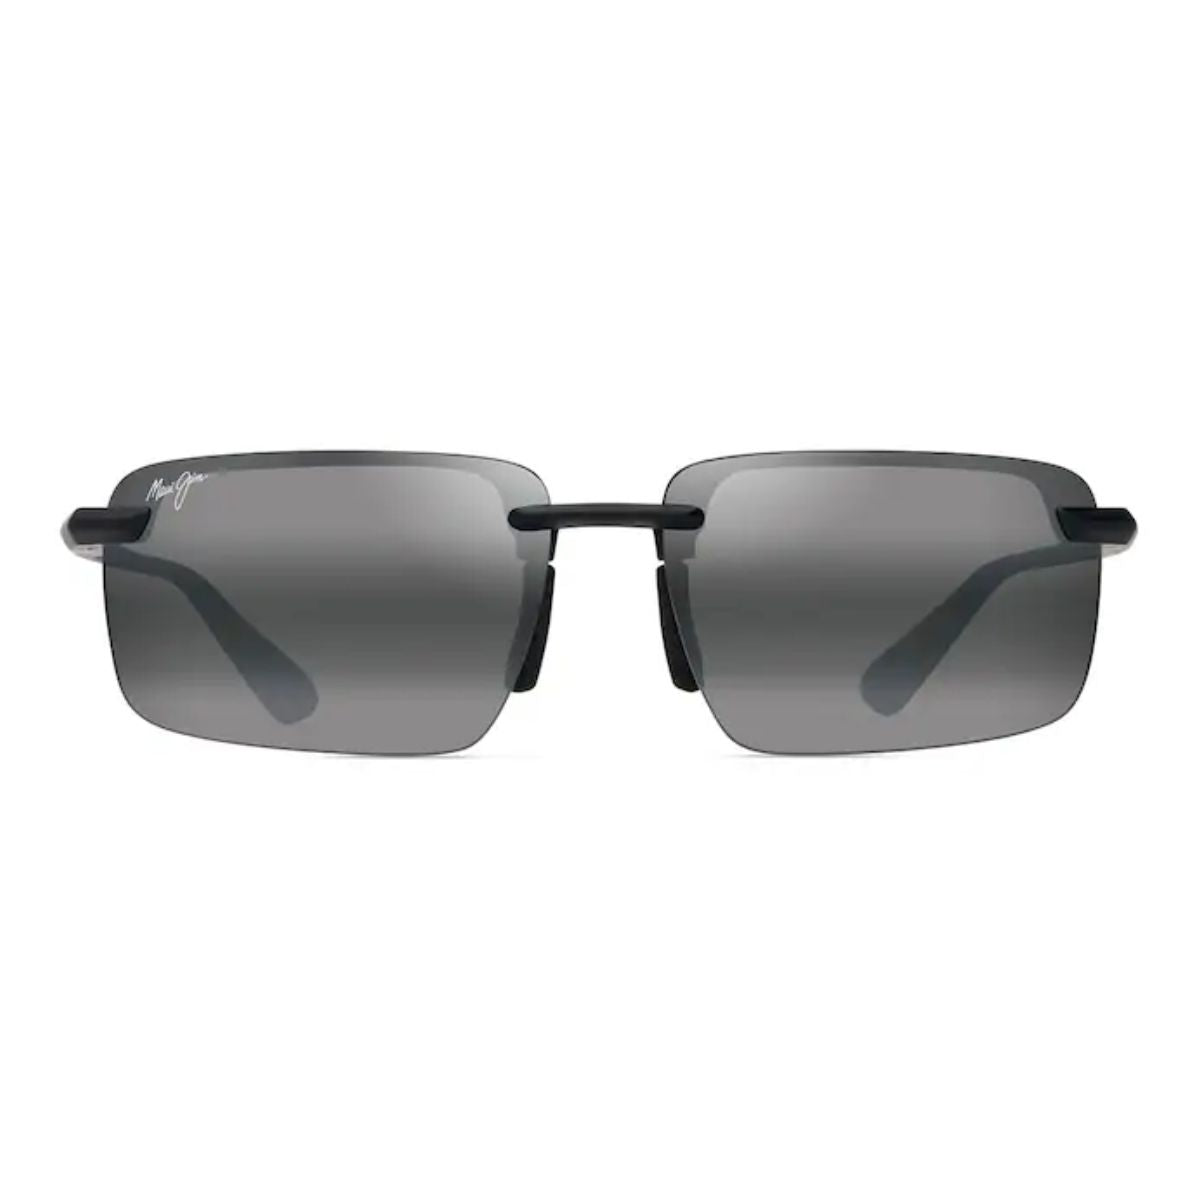 "Maui Jim Black Square Polarized Sunglasses For Mens At Optorium"